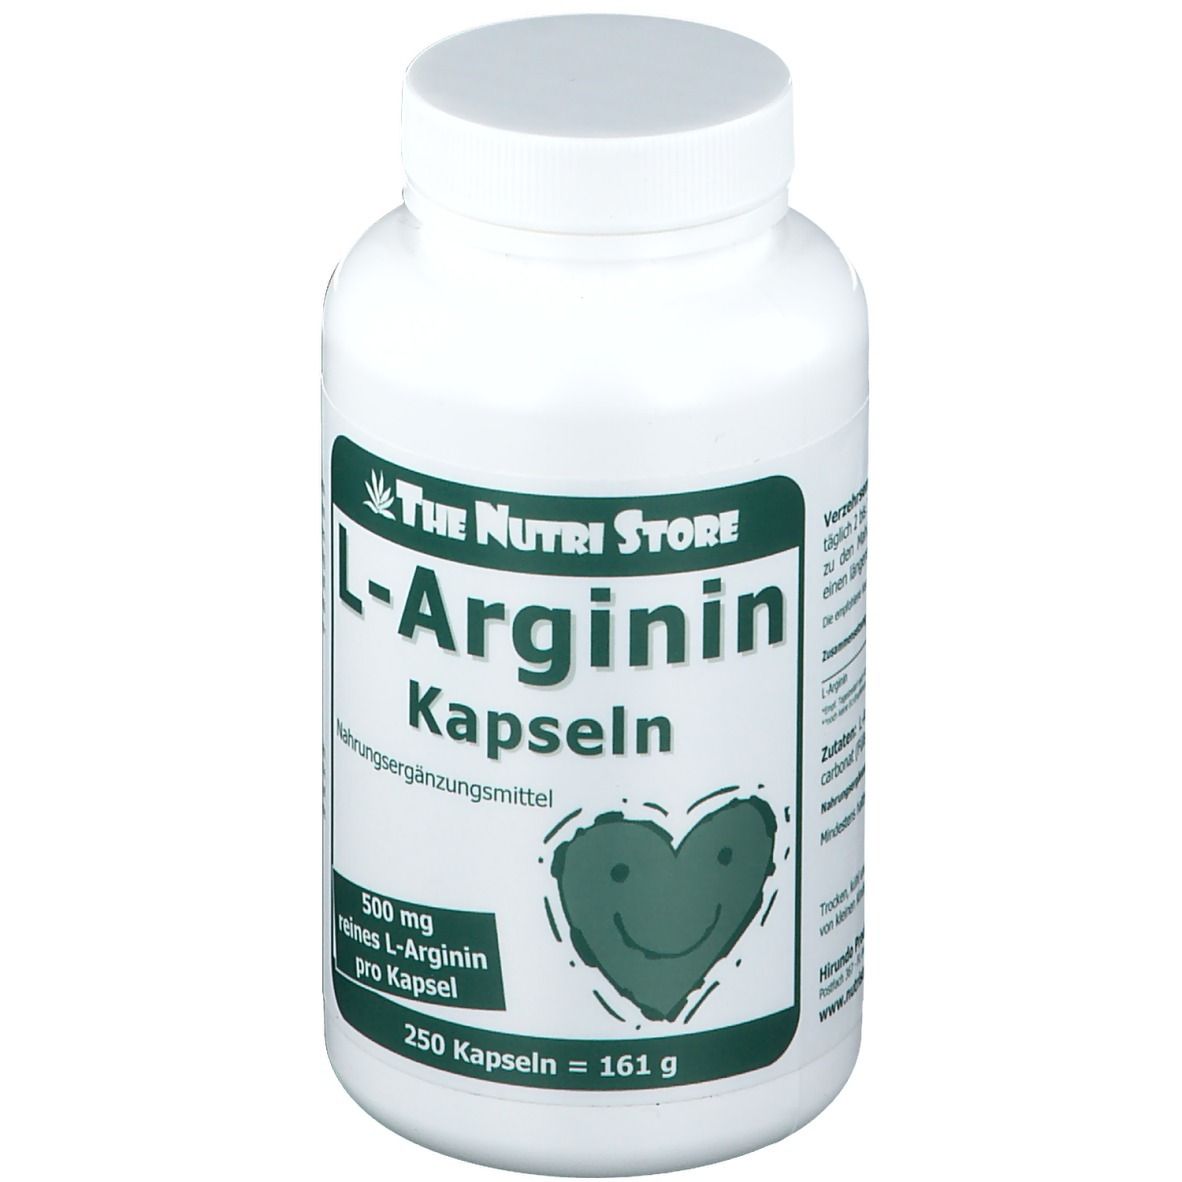 L-Arginin 500 mg